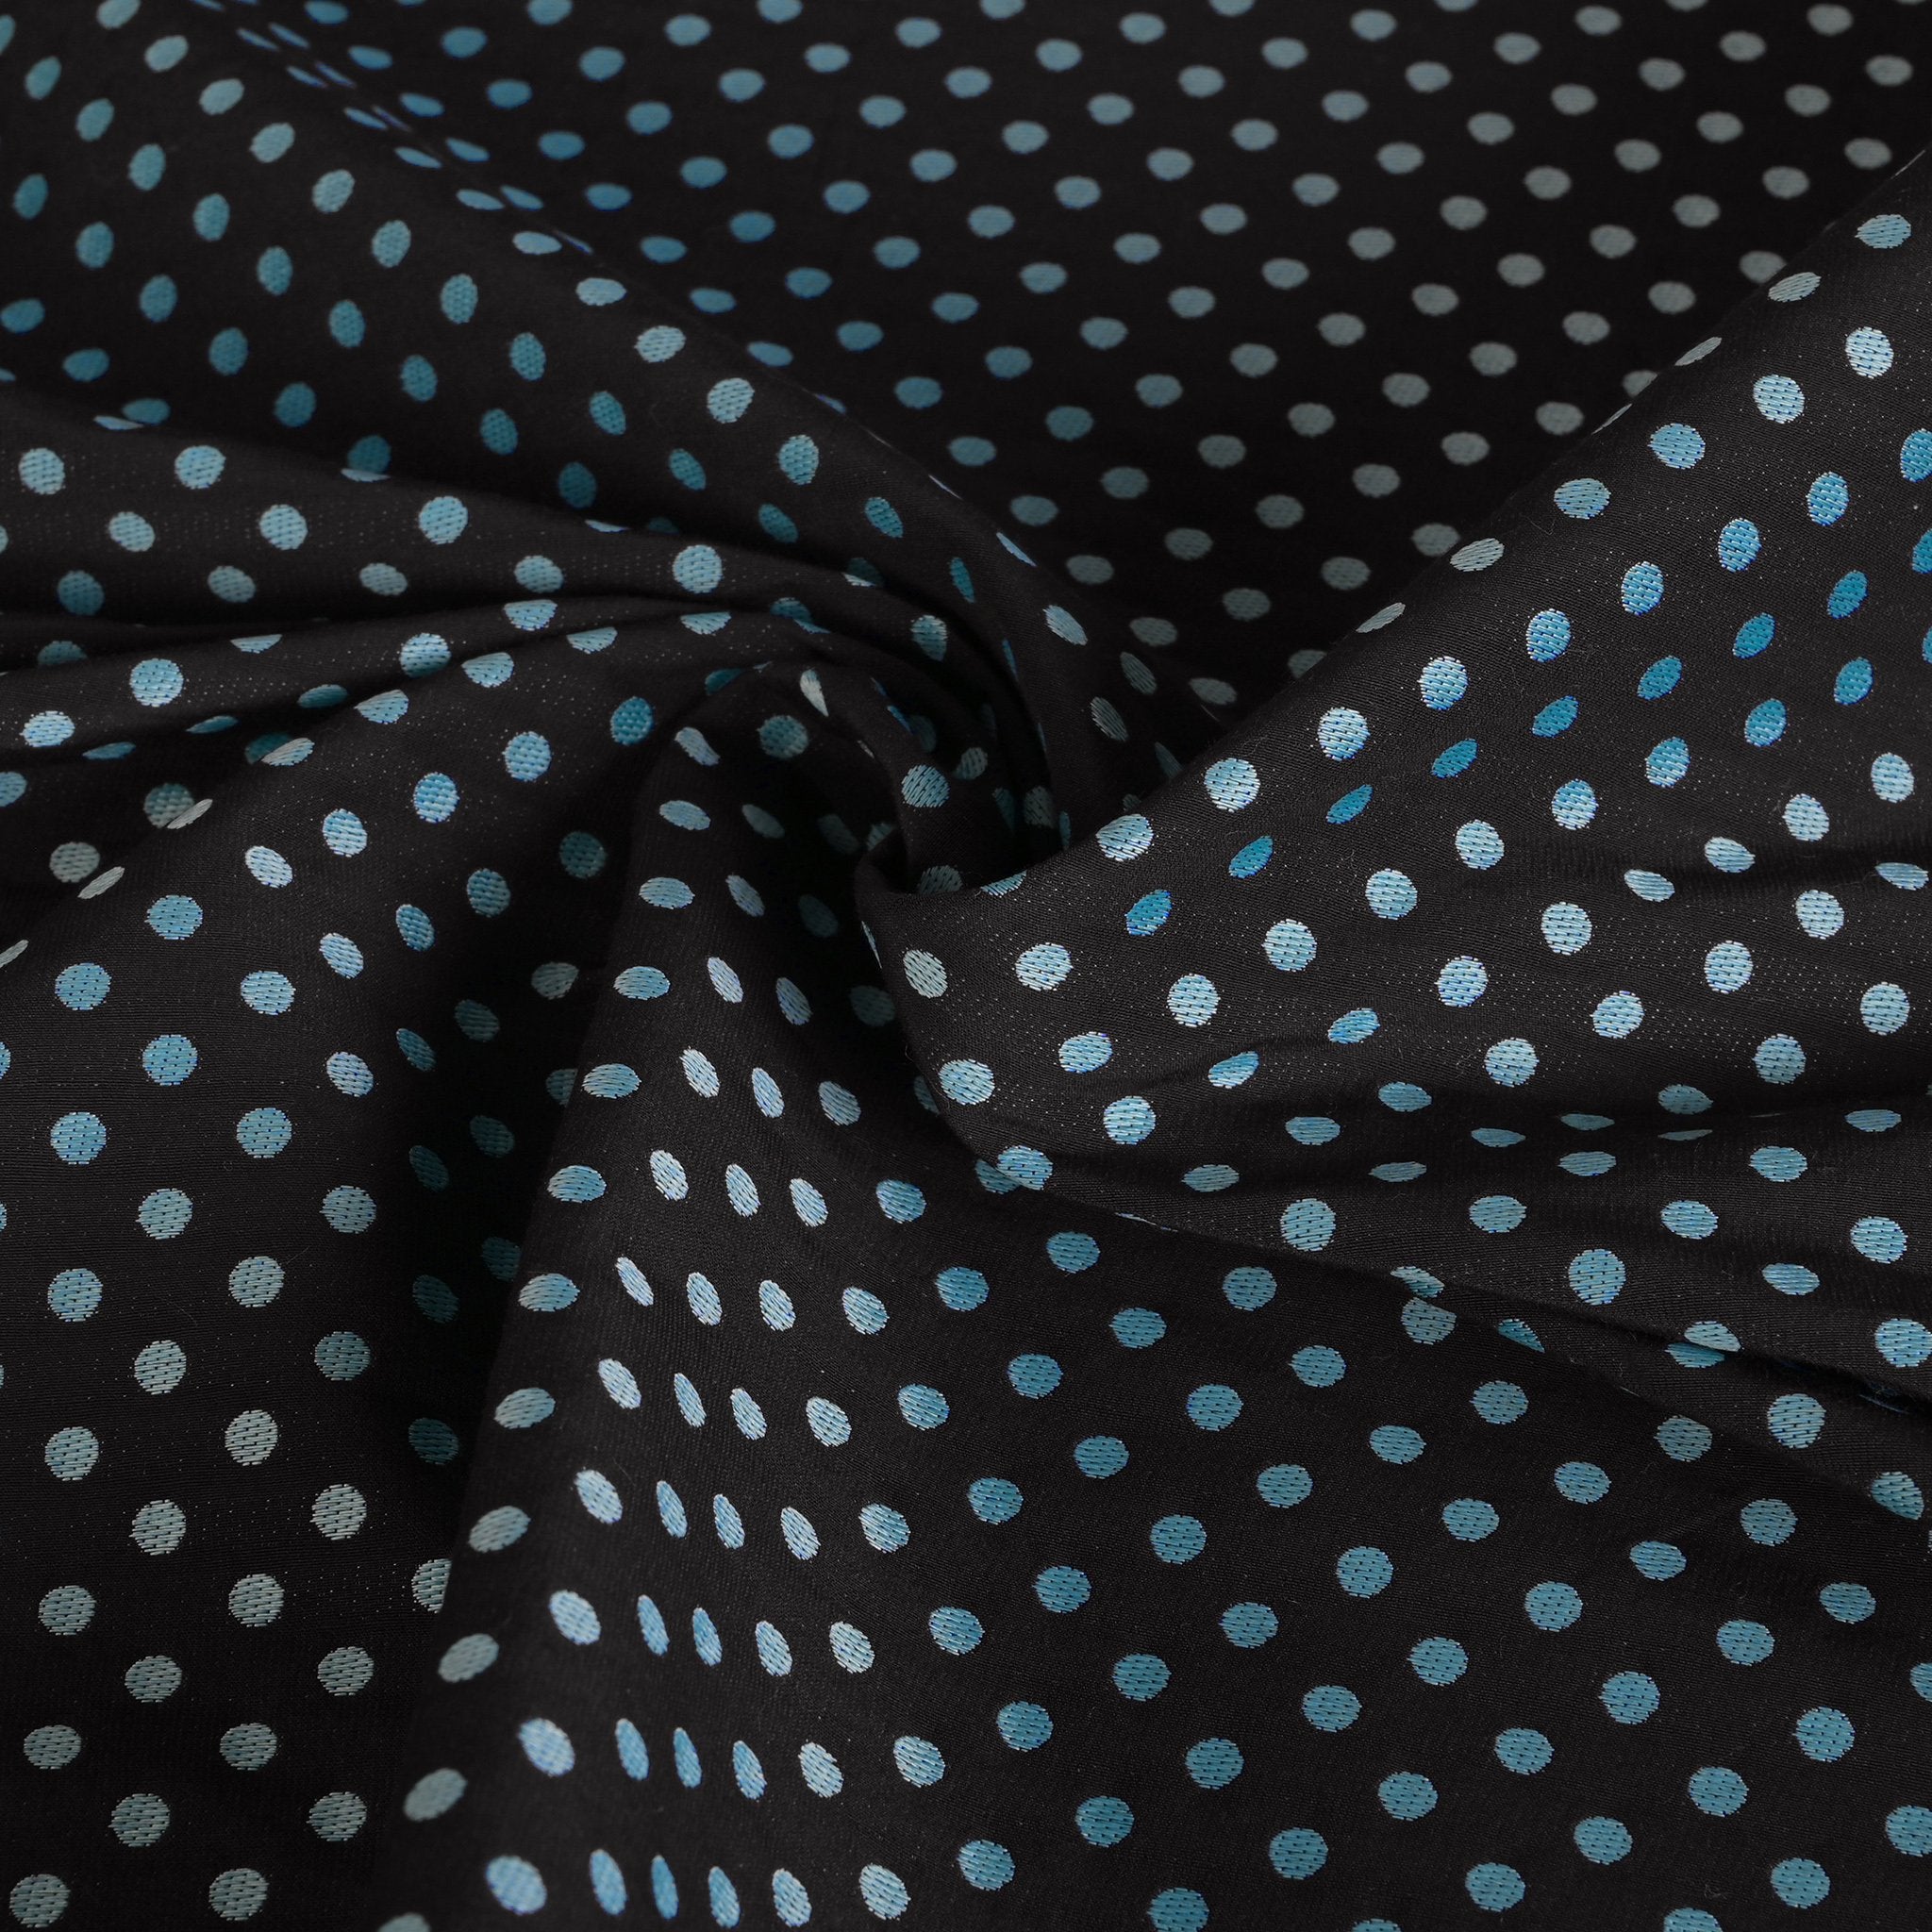 Black Polka Dot Jacquard Fabric 3681